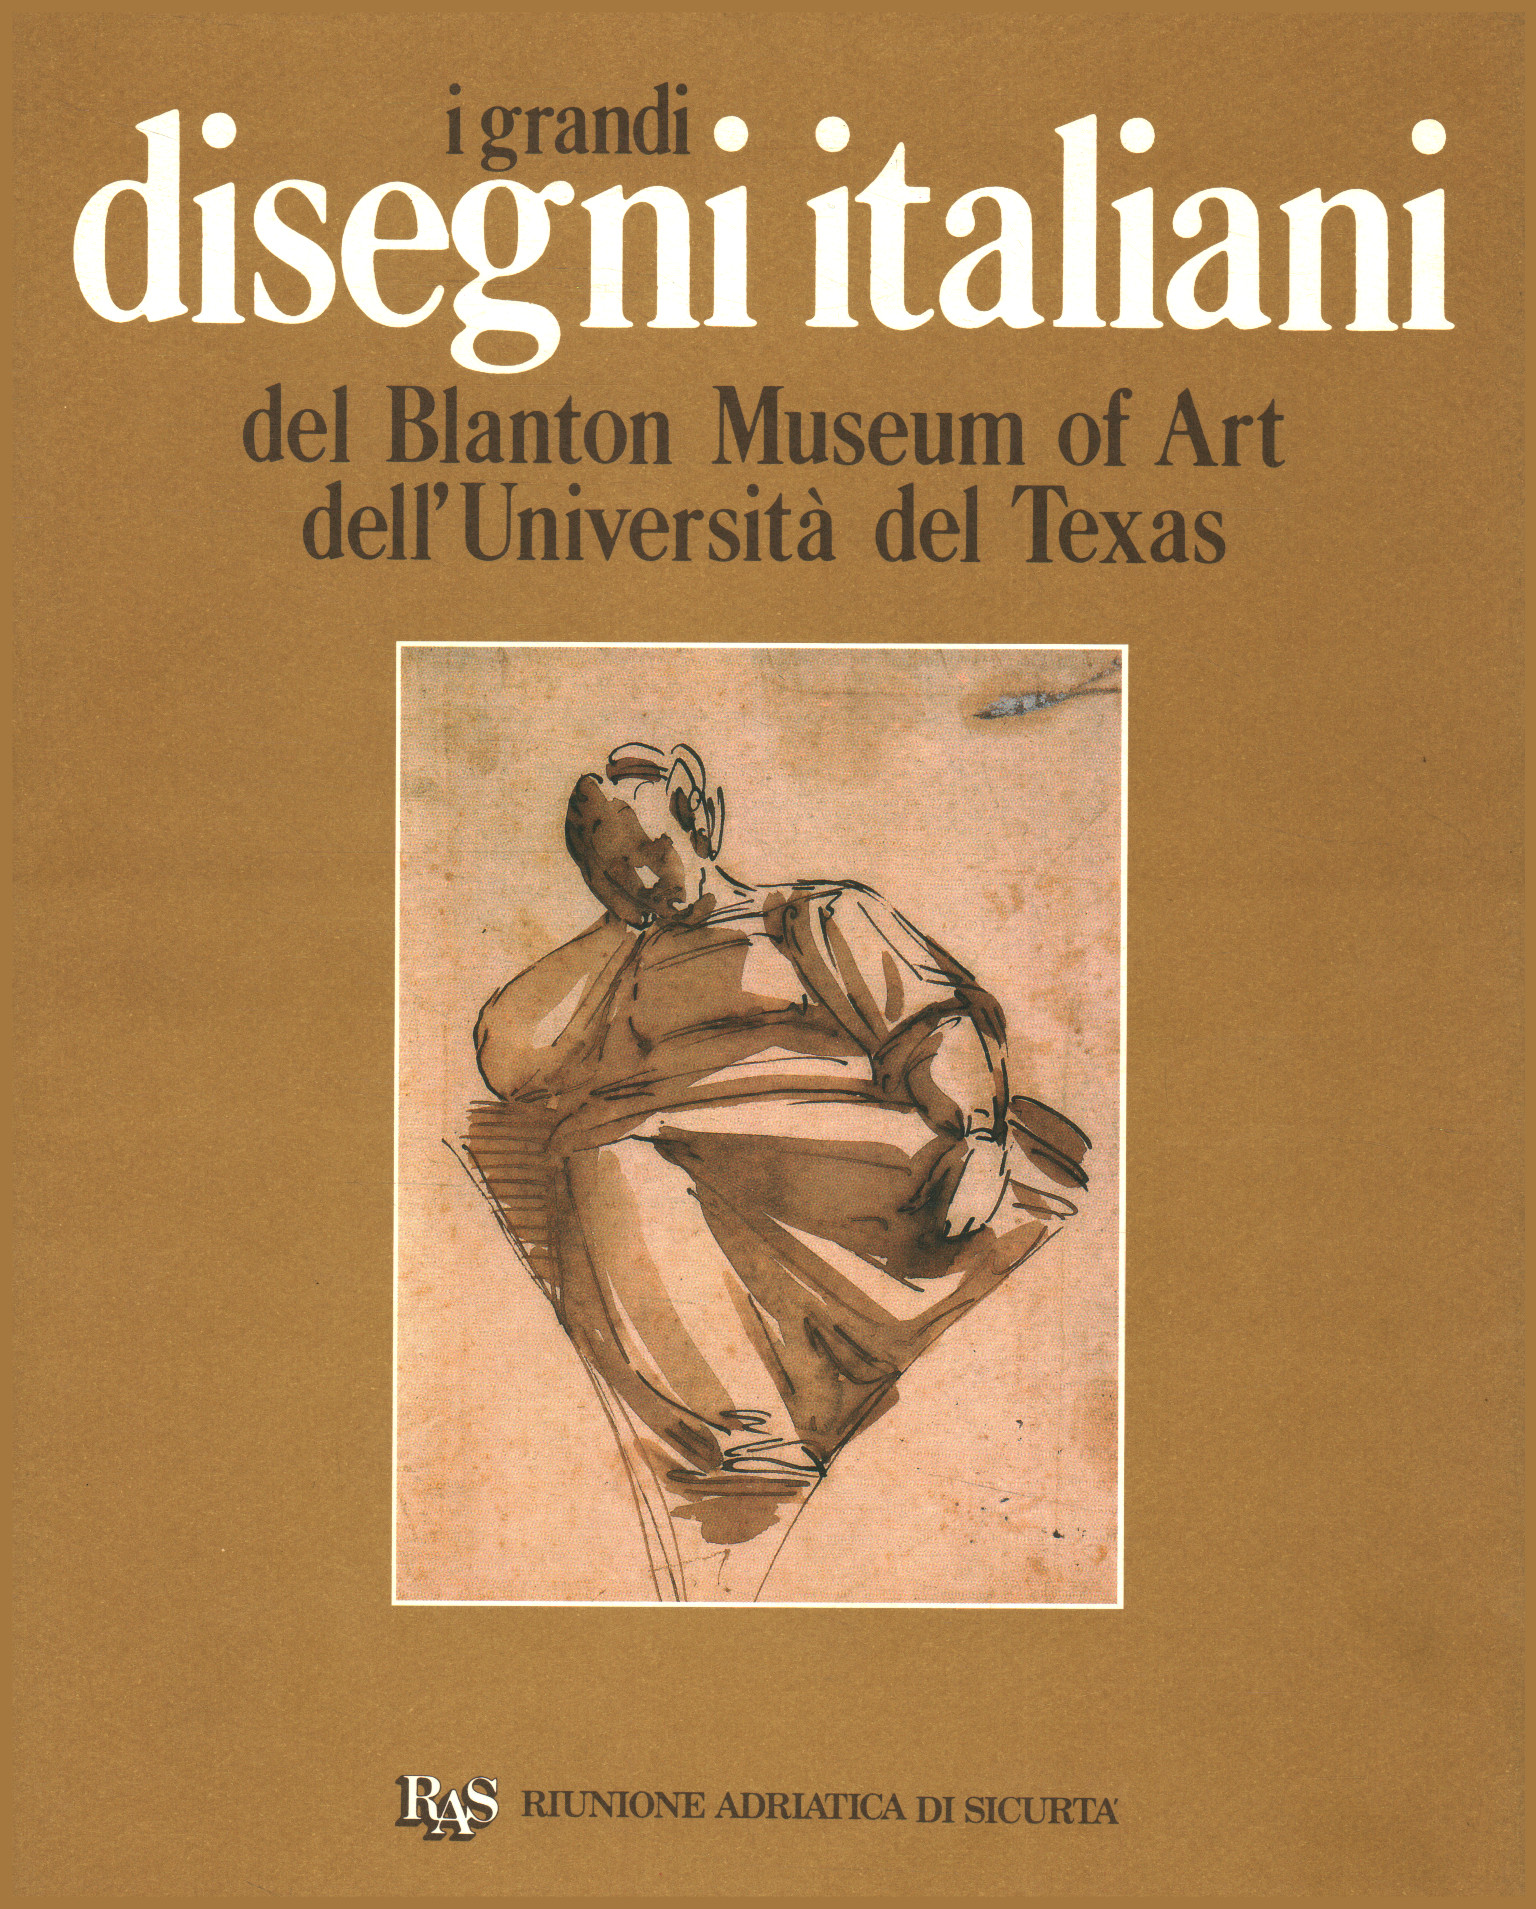 Blanton's great Italian drawings